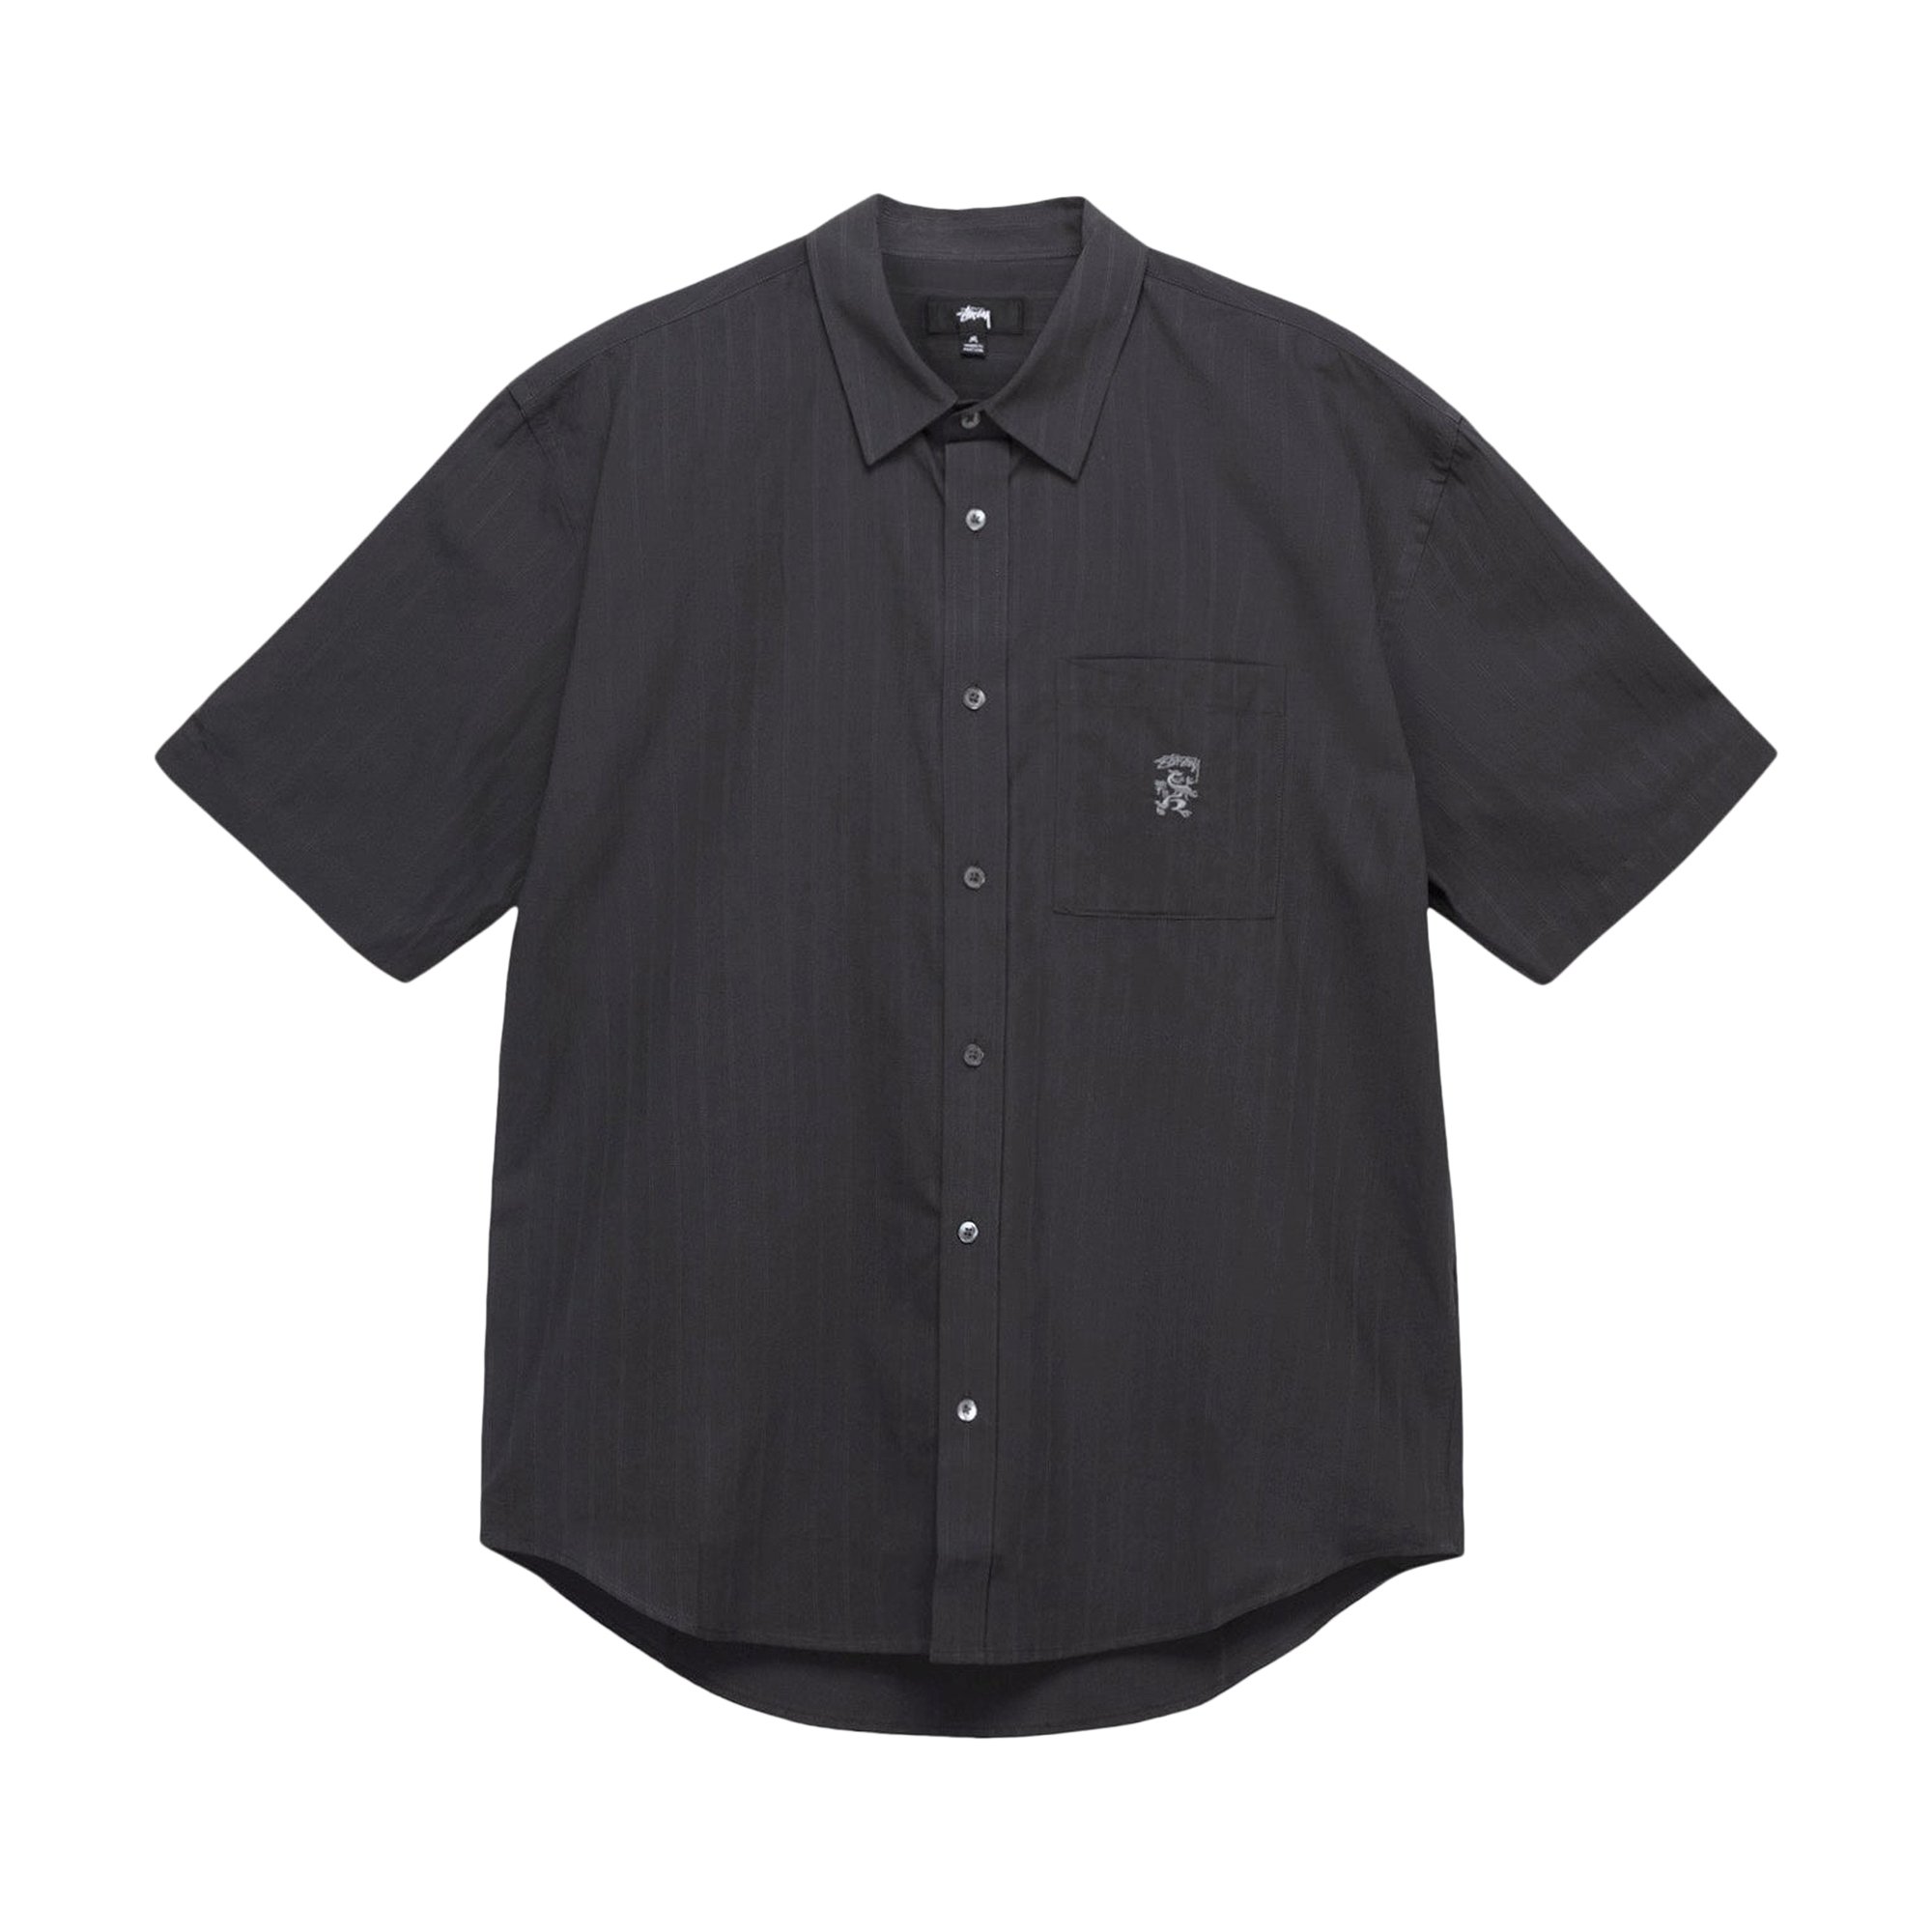 Buy Stussy Boxy Striped Shirt 'Black Stripe' - 1110293 BLAC | GOAT